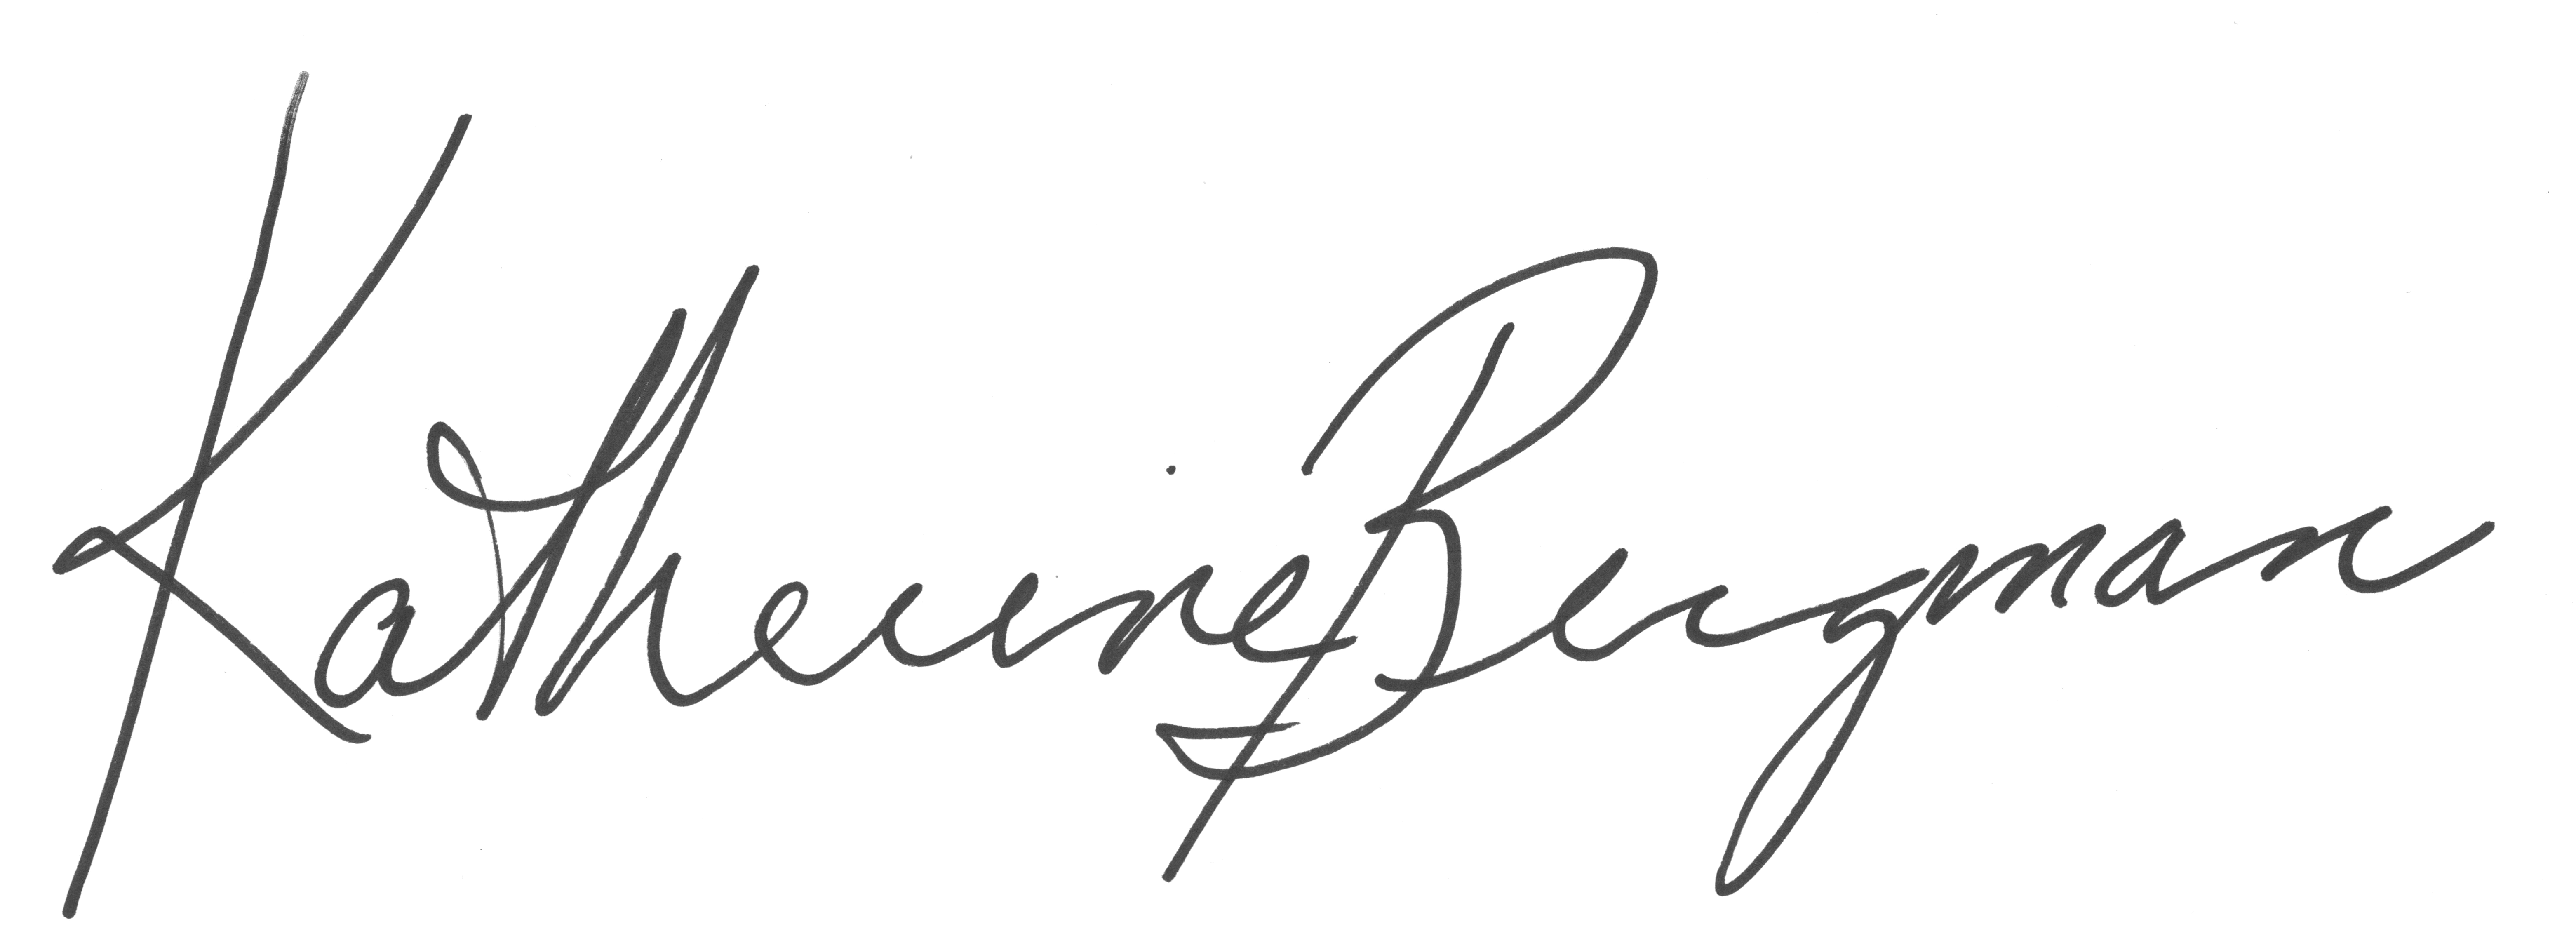 Signature of Katherine Bergman